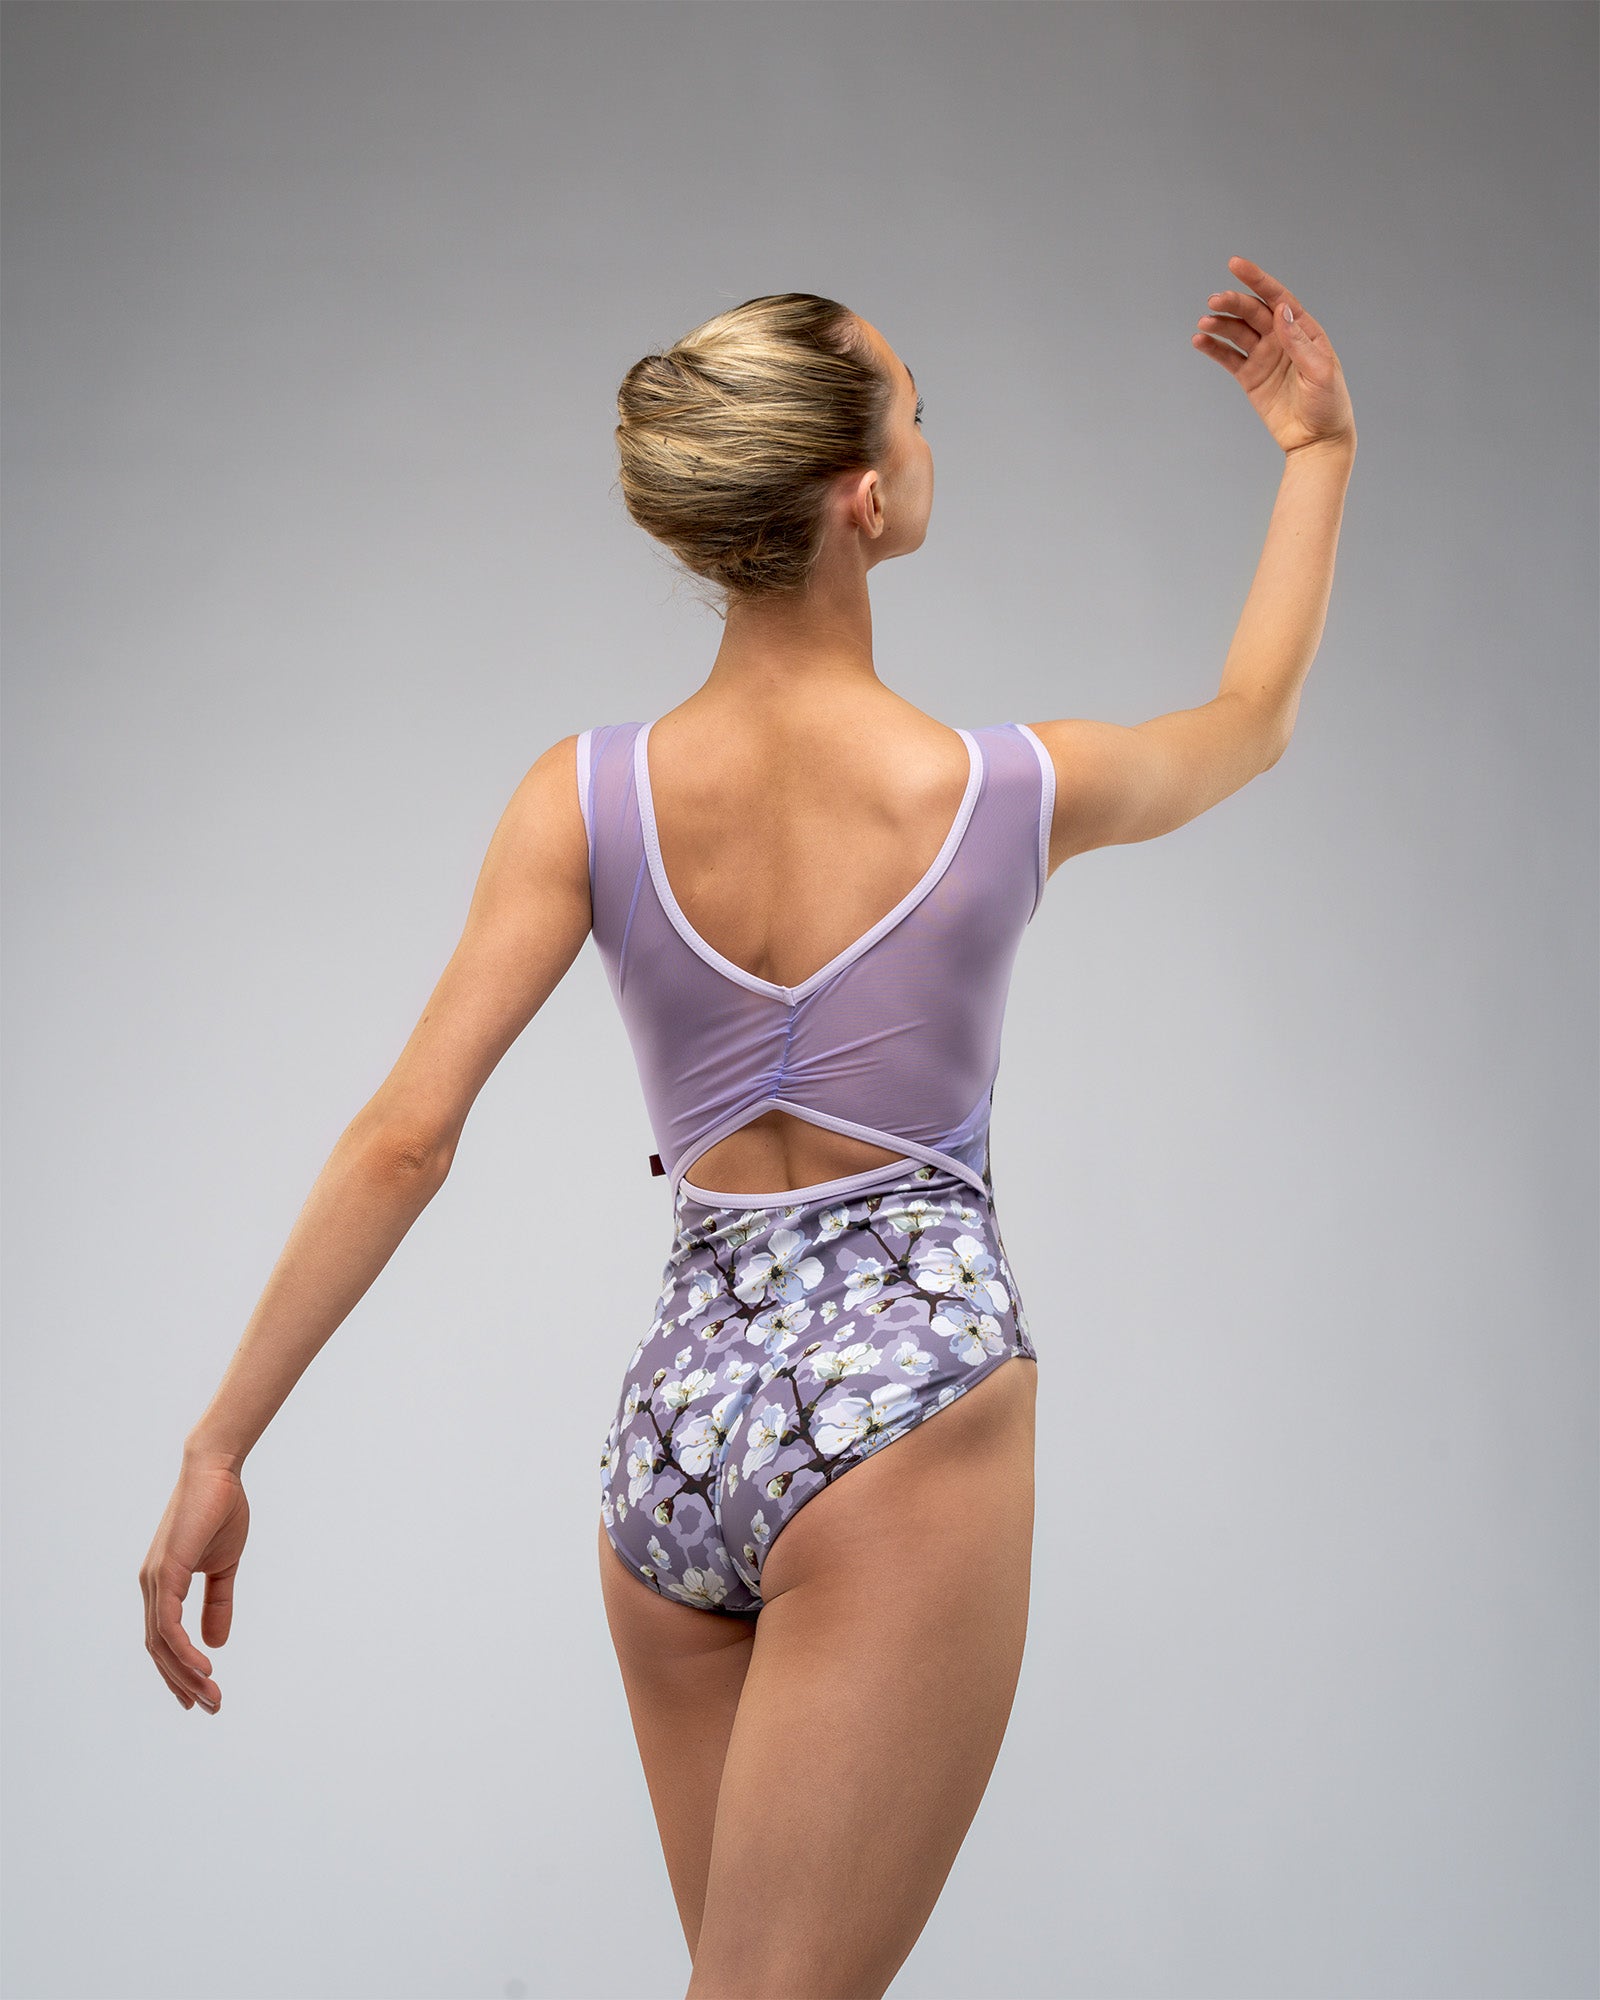 Ballet Dancer, wearing ladies, lilac, floral purple mesh leotard